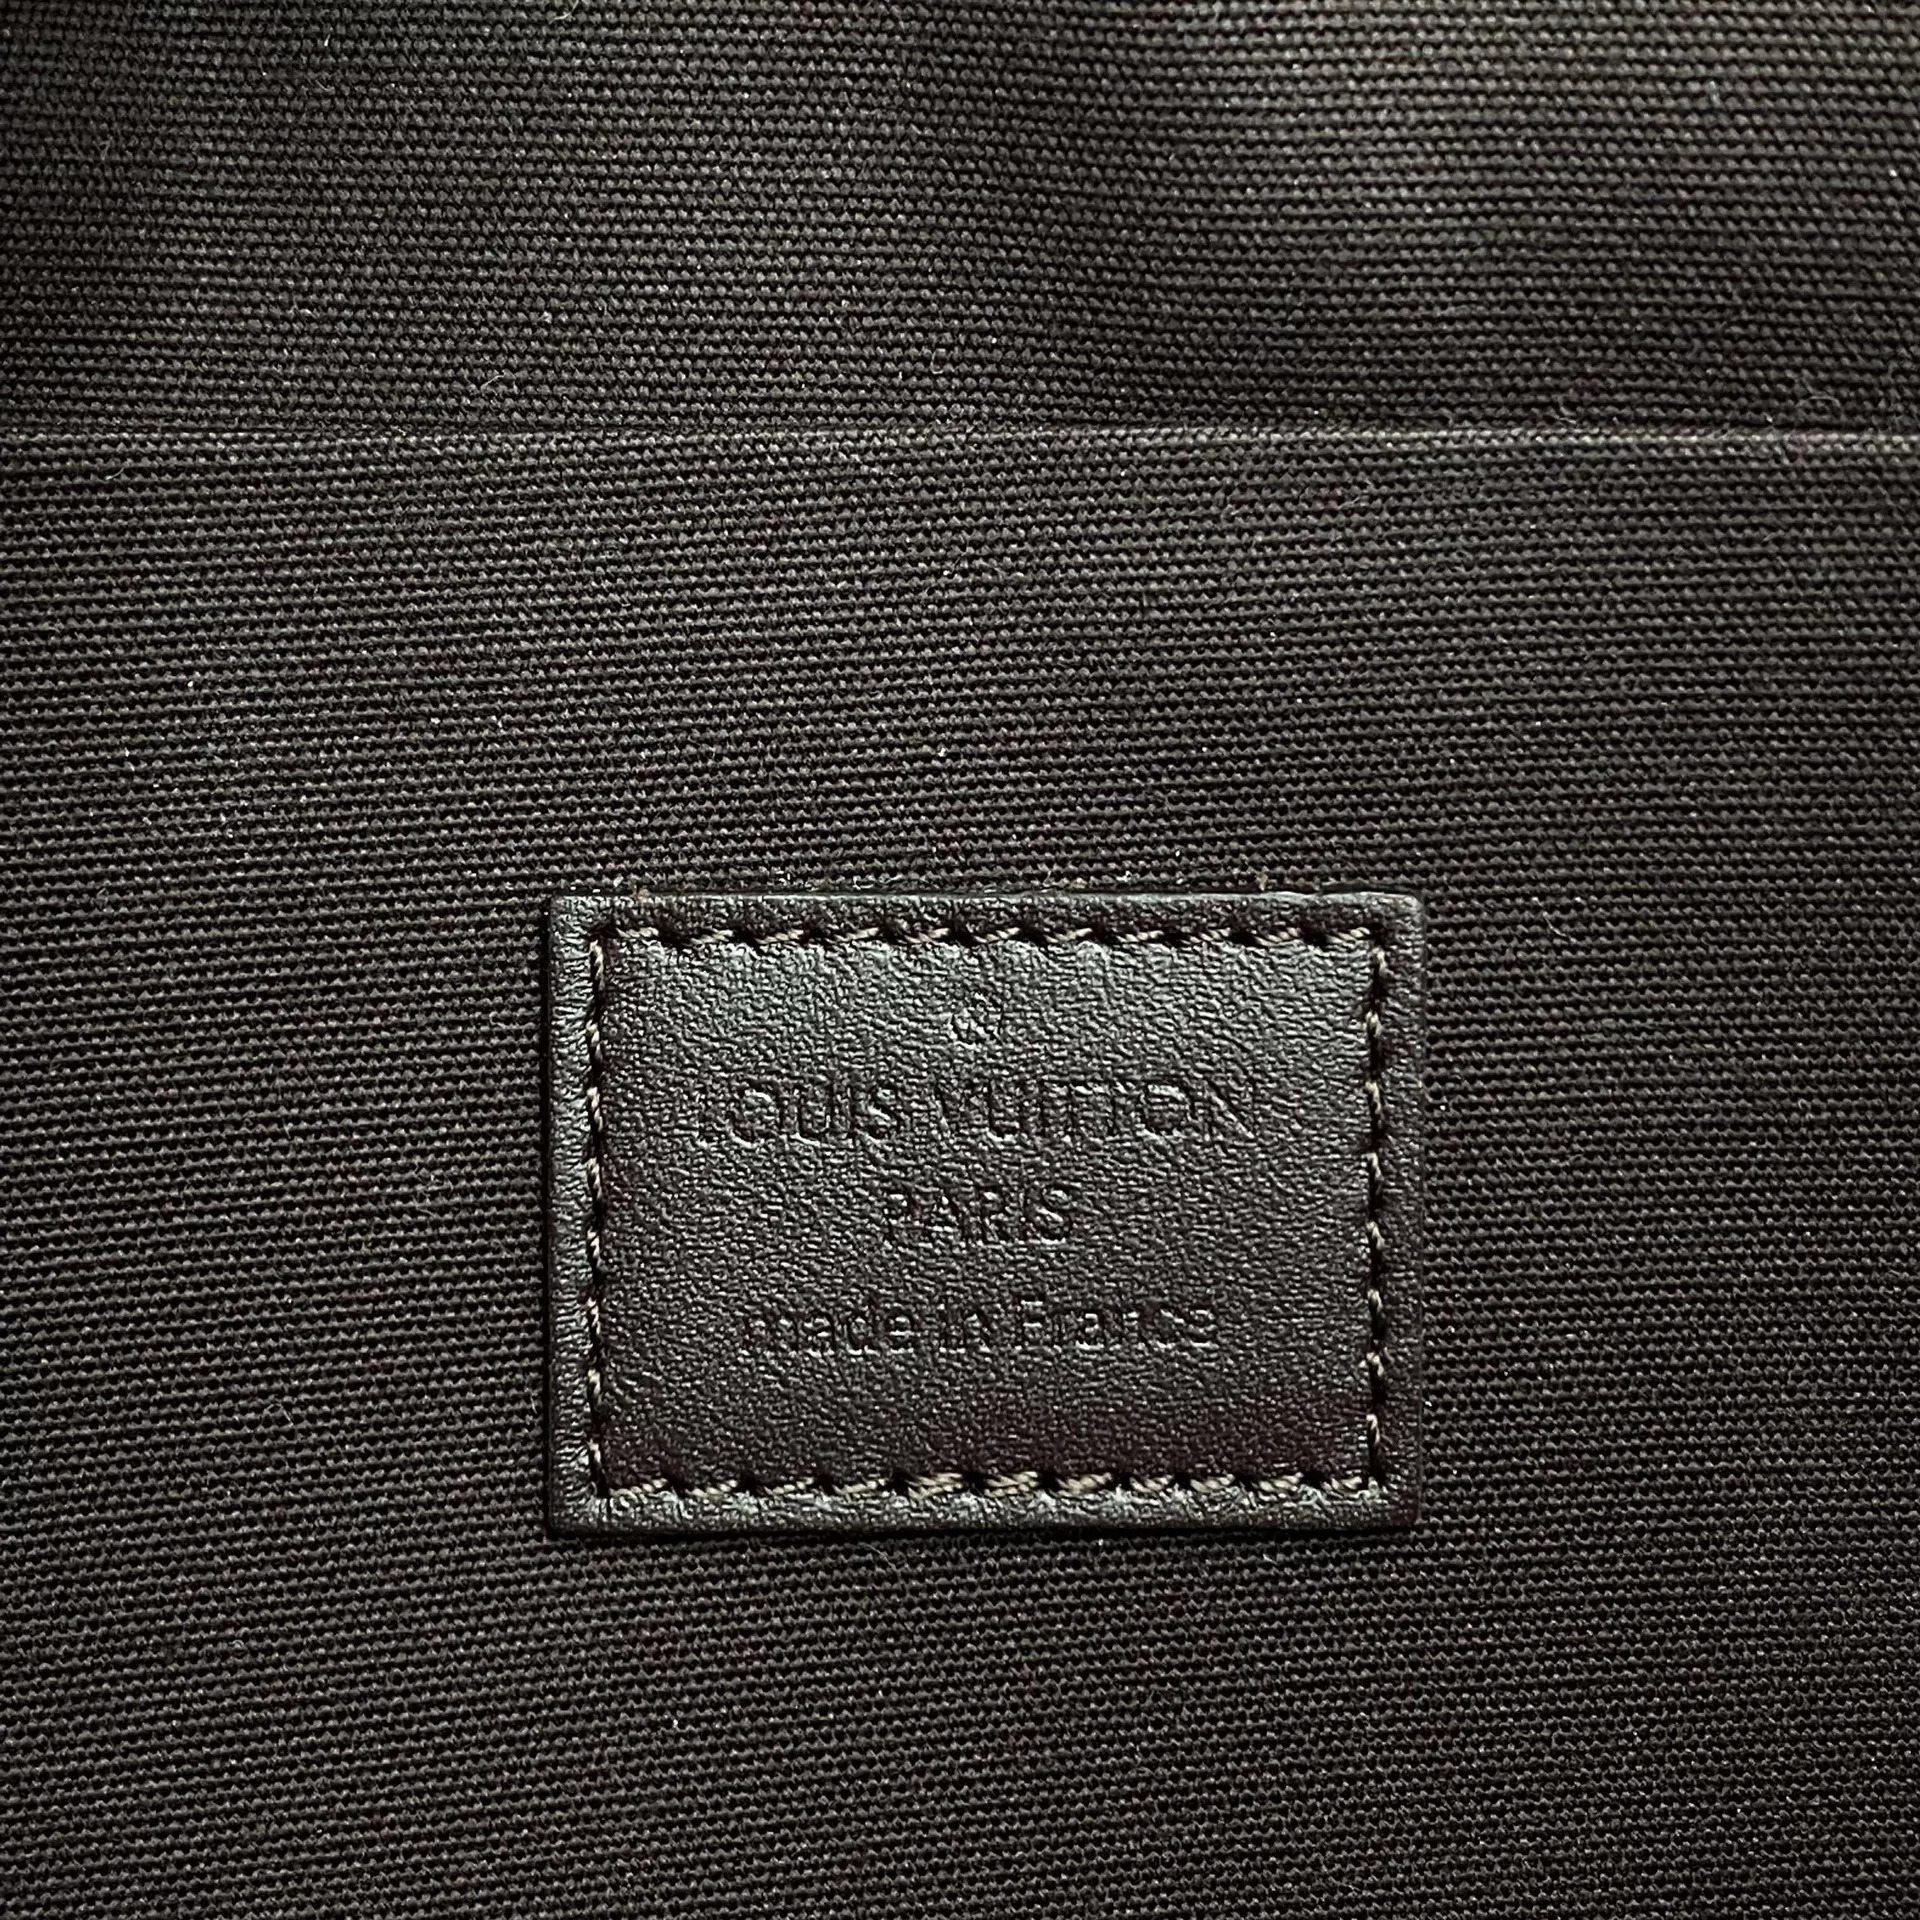 Bolsa Louis Vuitton Pochette Félicie